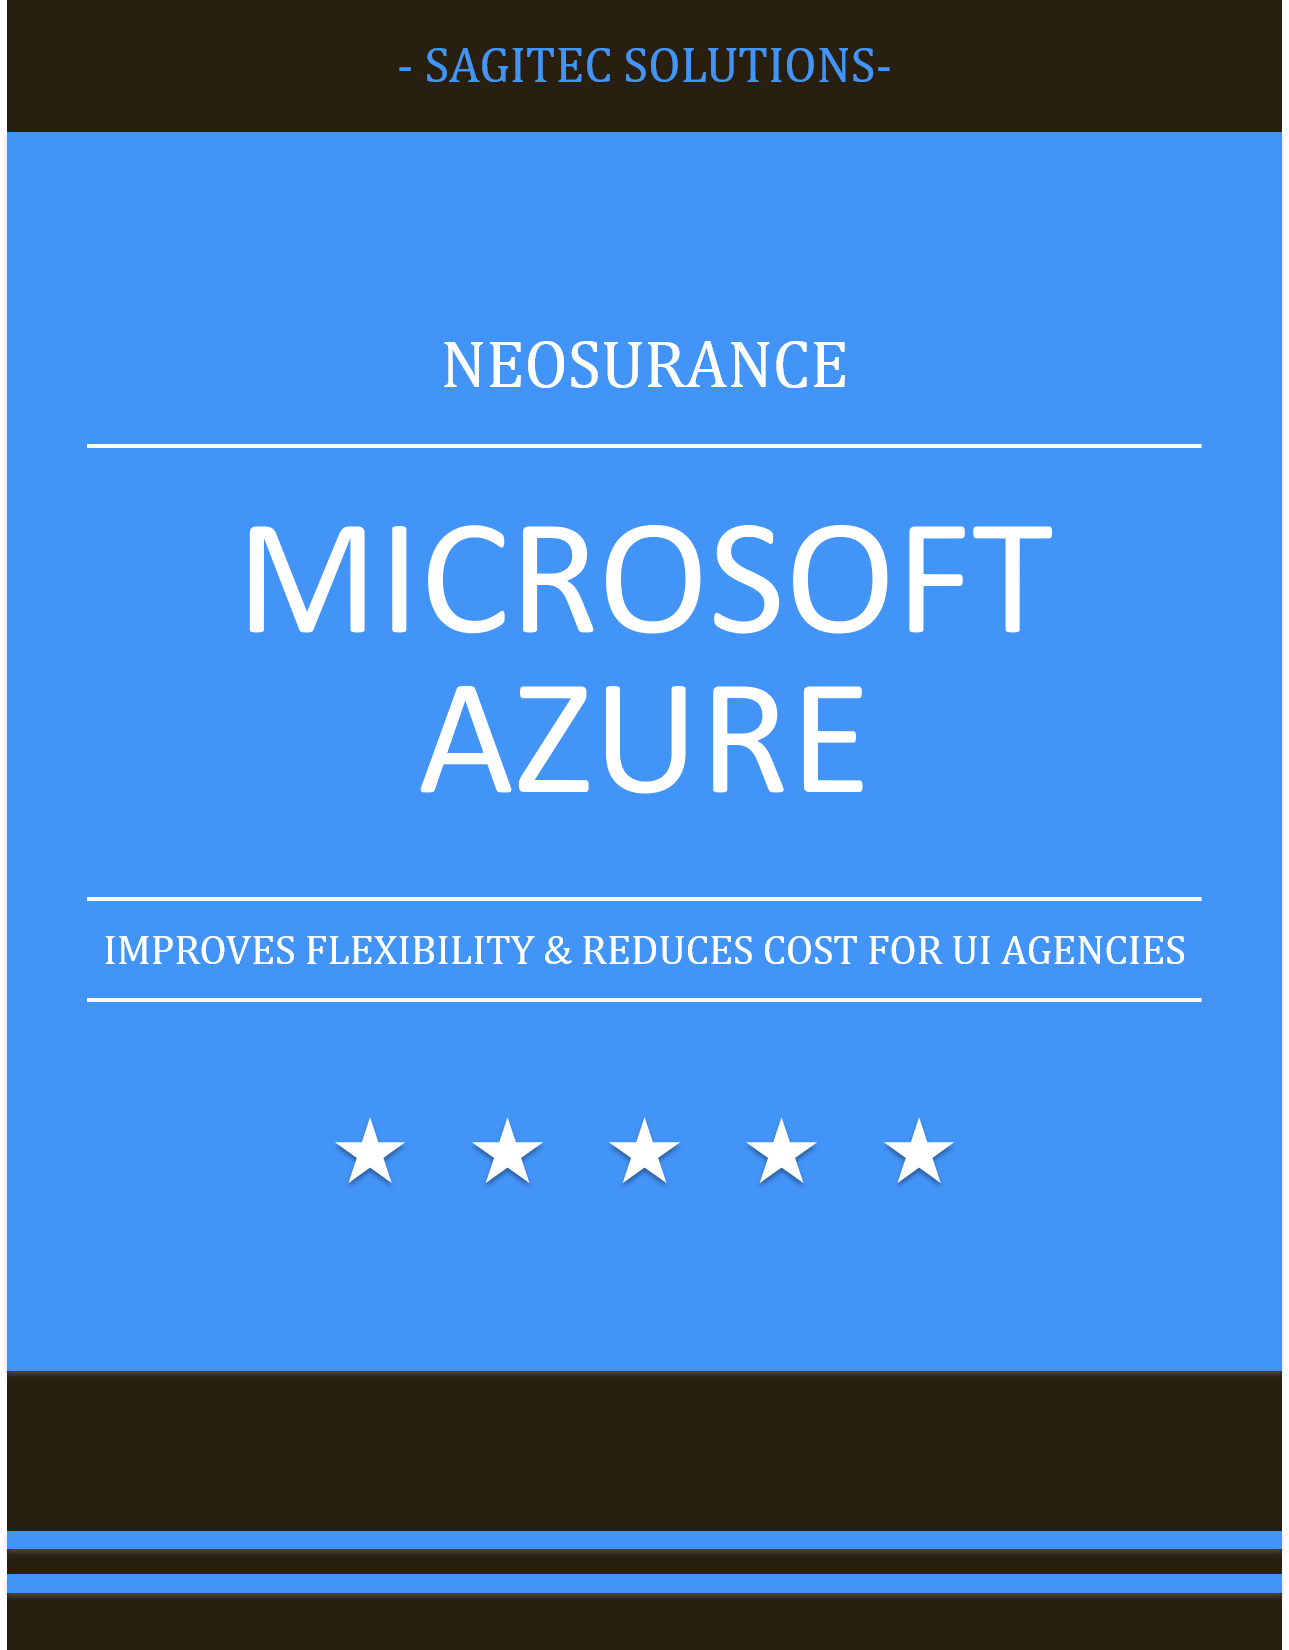 Download UI Microsoft Azure Case Study.png